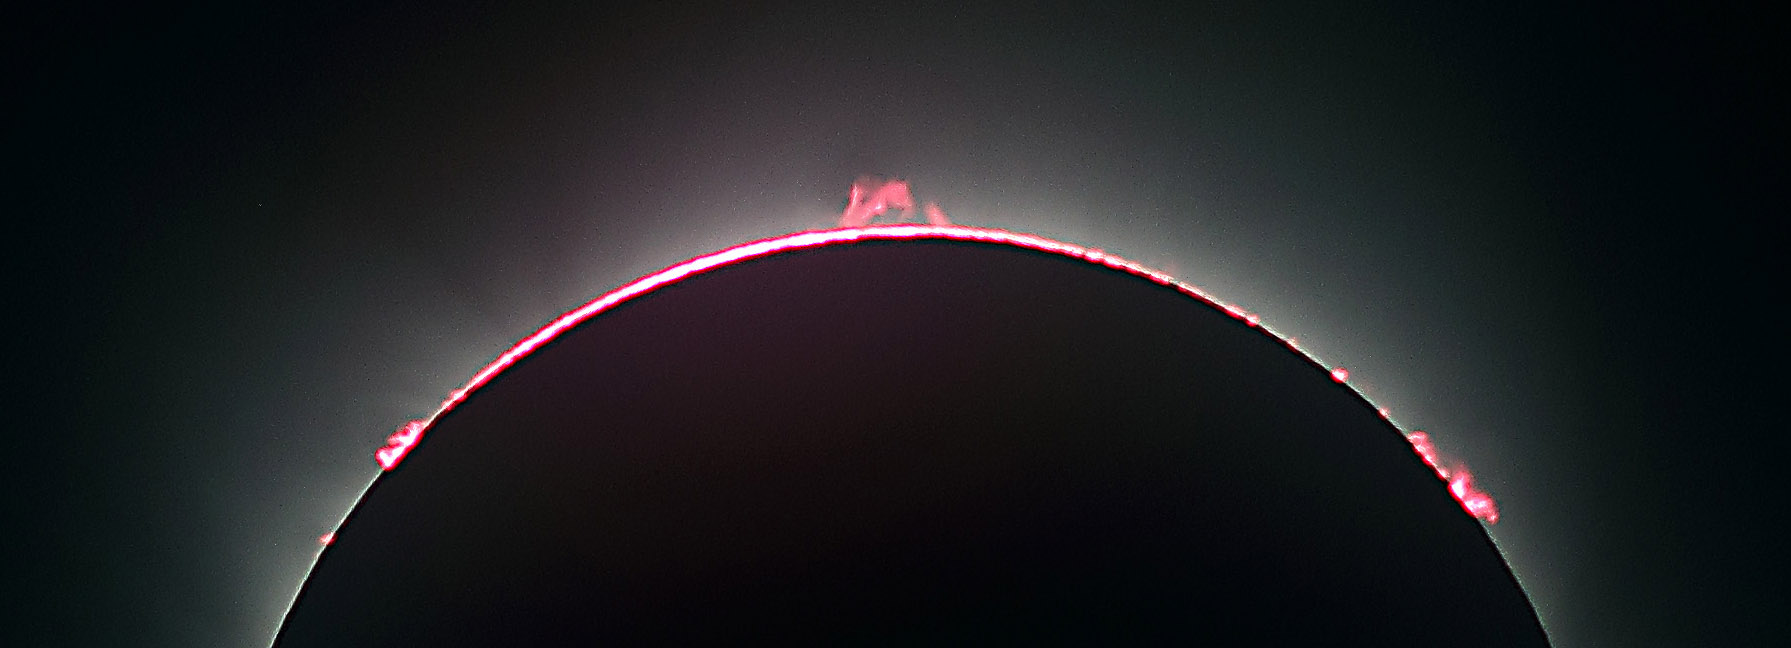 Solar Prominences during the 2017 Total Solar Eclipse by John Asztalos. MAS image.